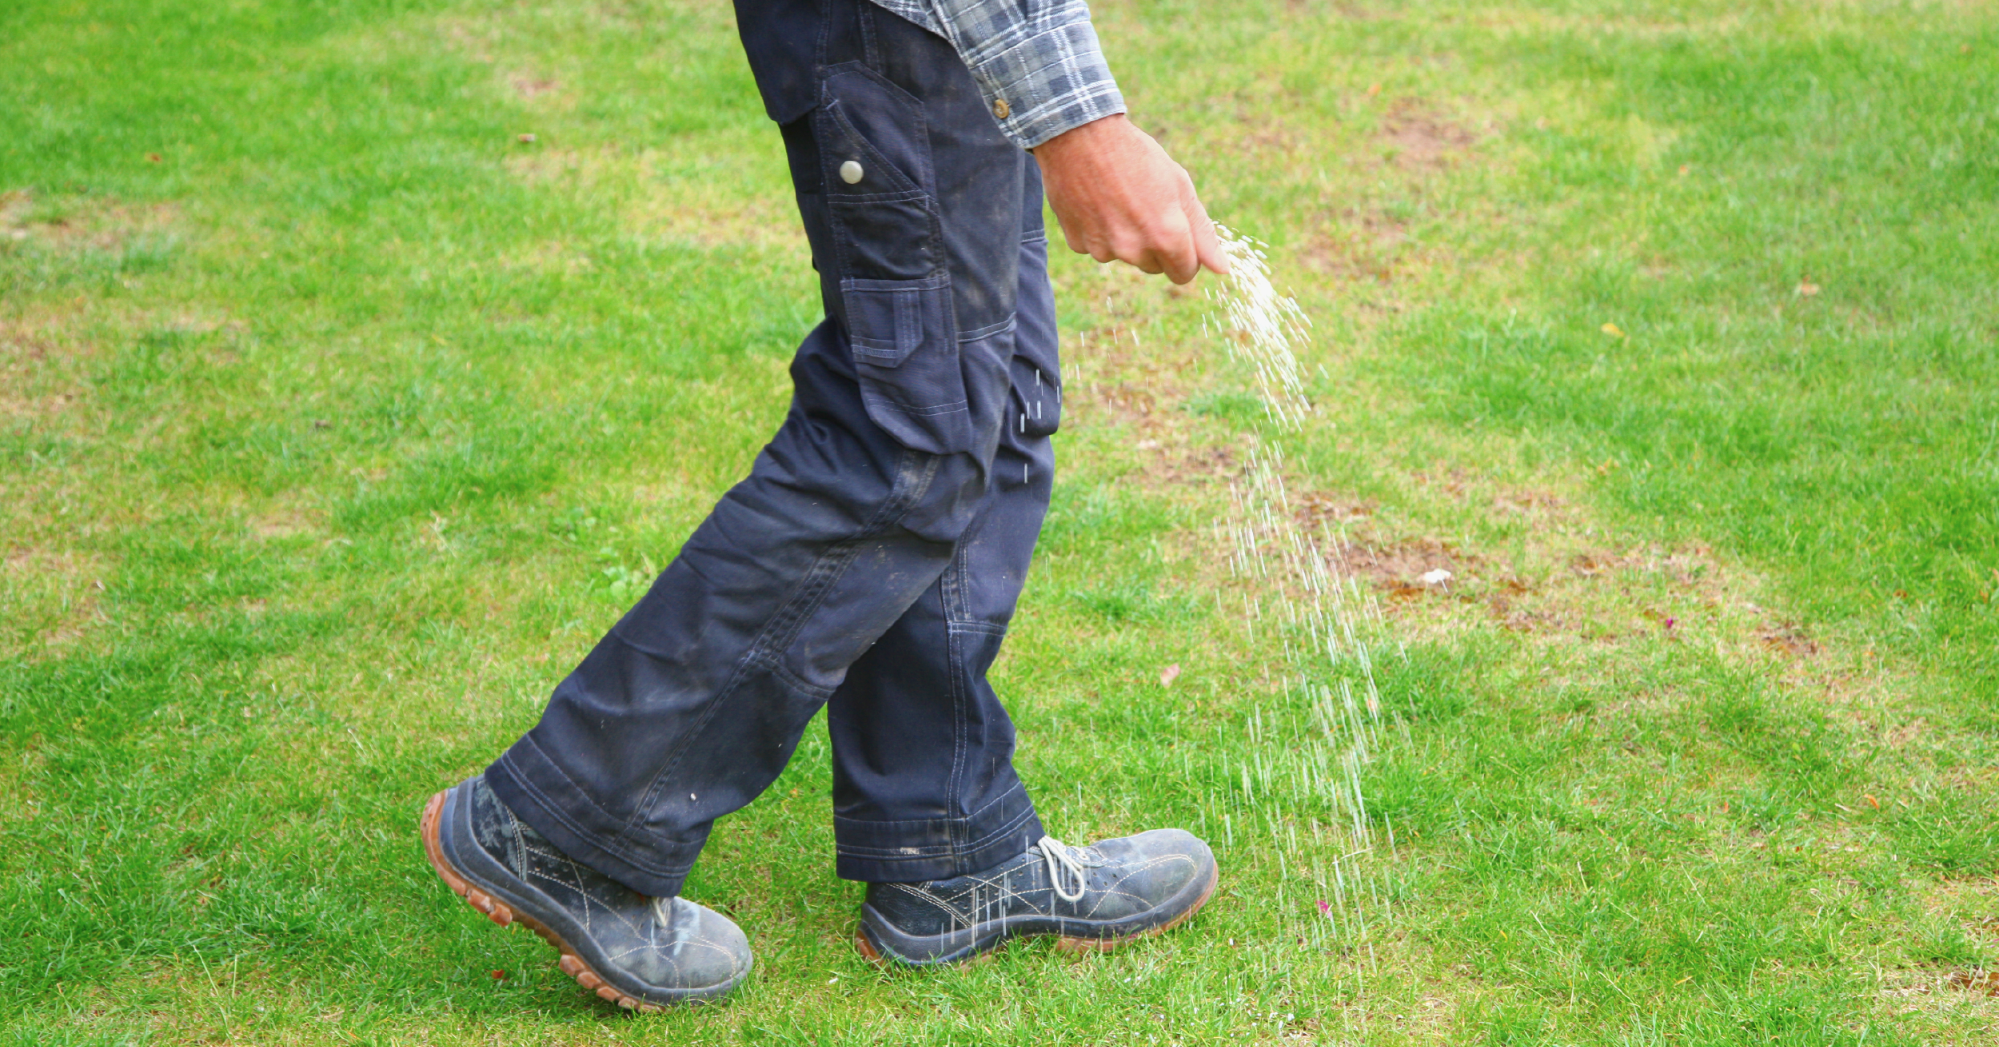 man spreading fertilizer on his lawn